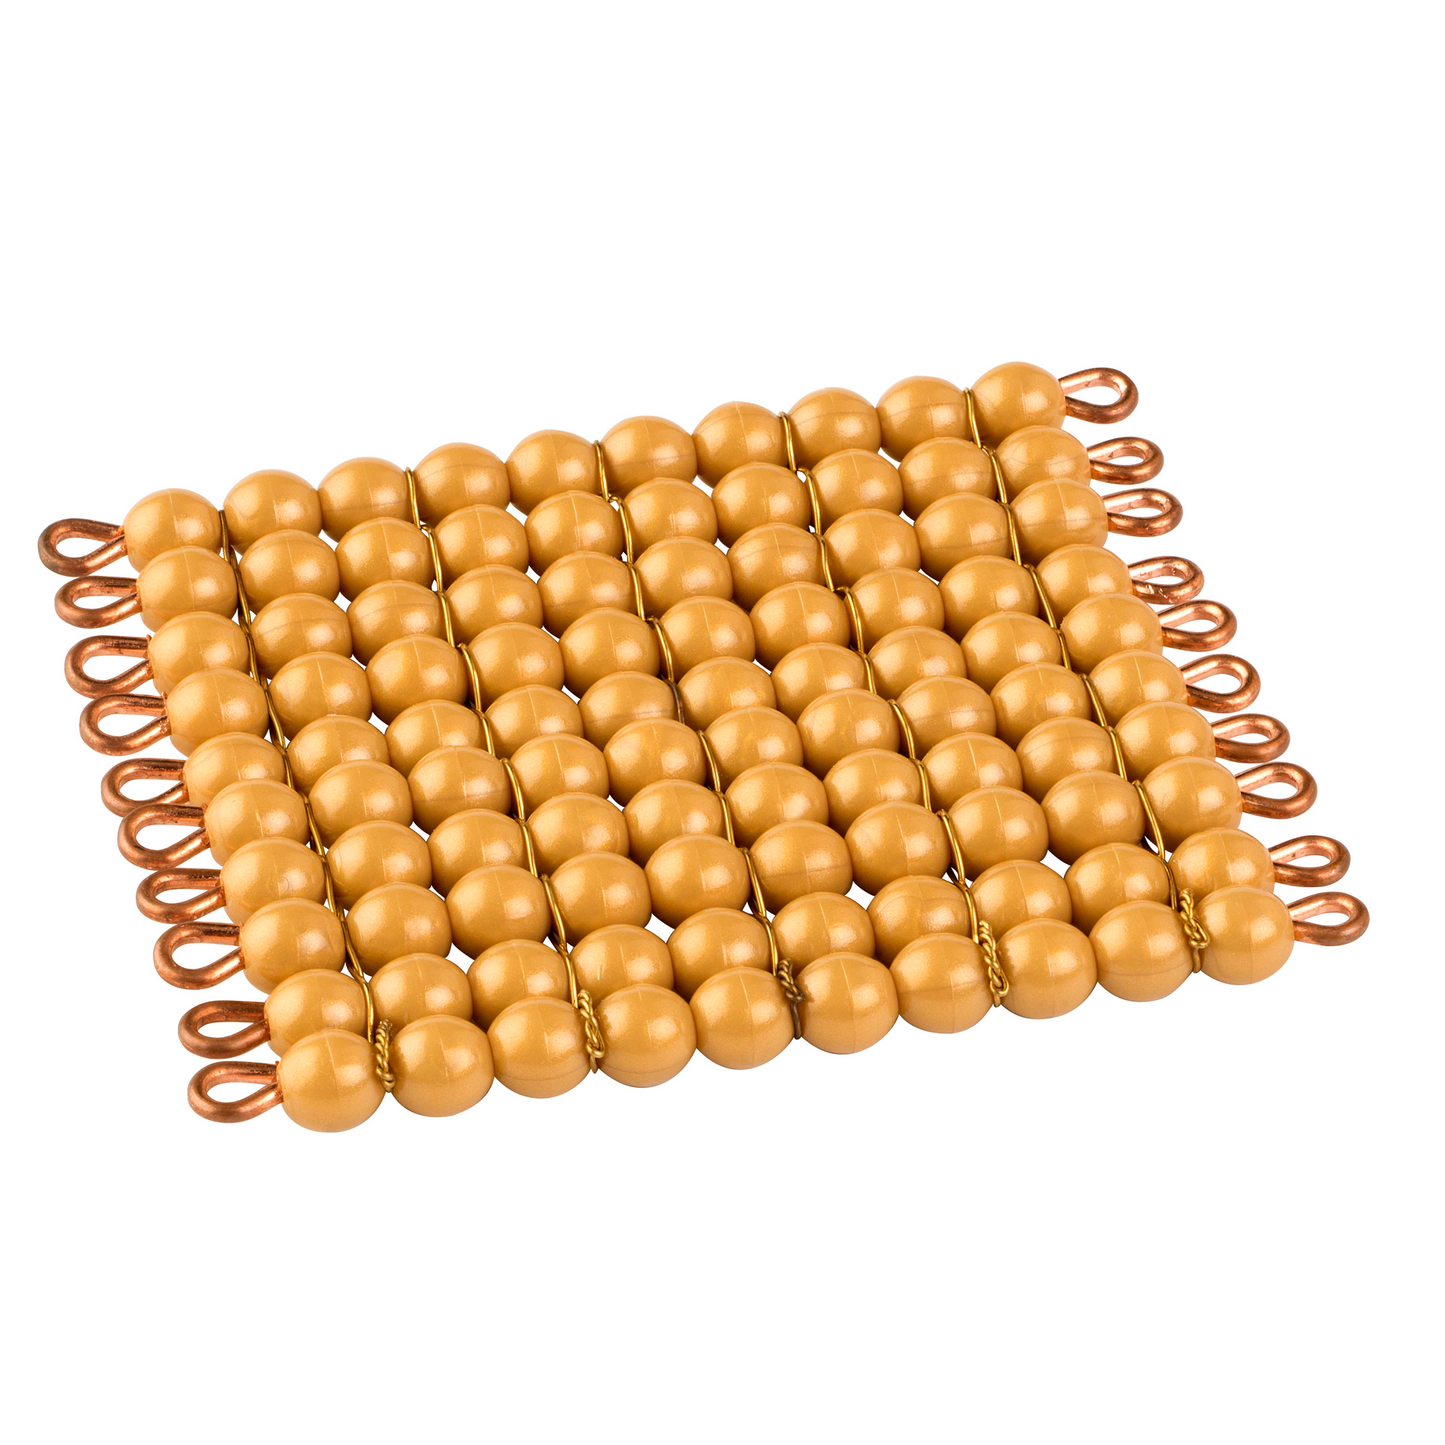 Square of 100 individual nylon beads - Nienhuis AMI